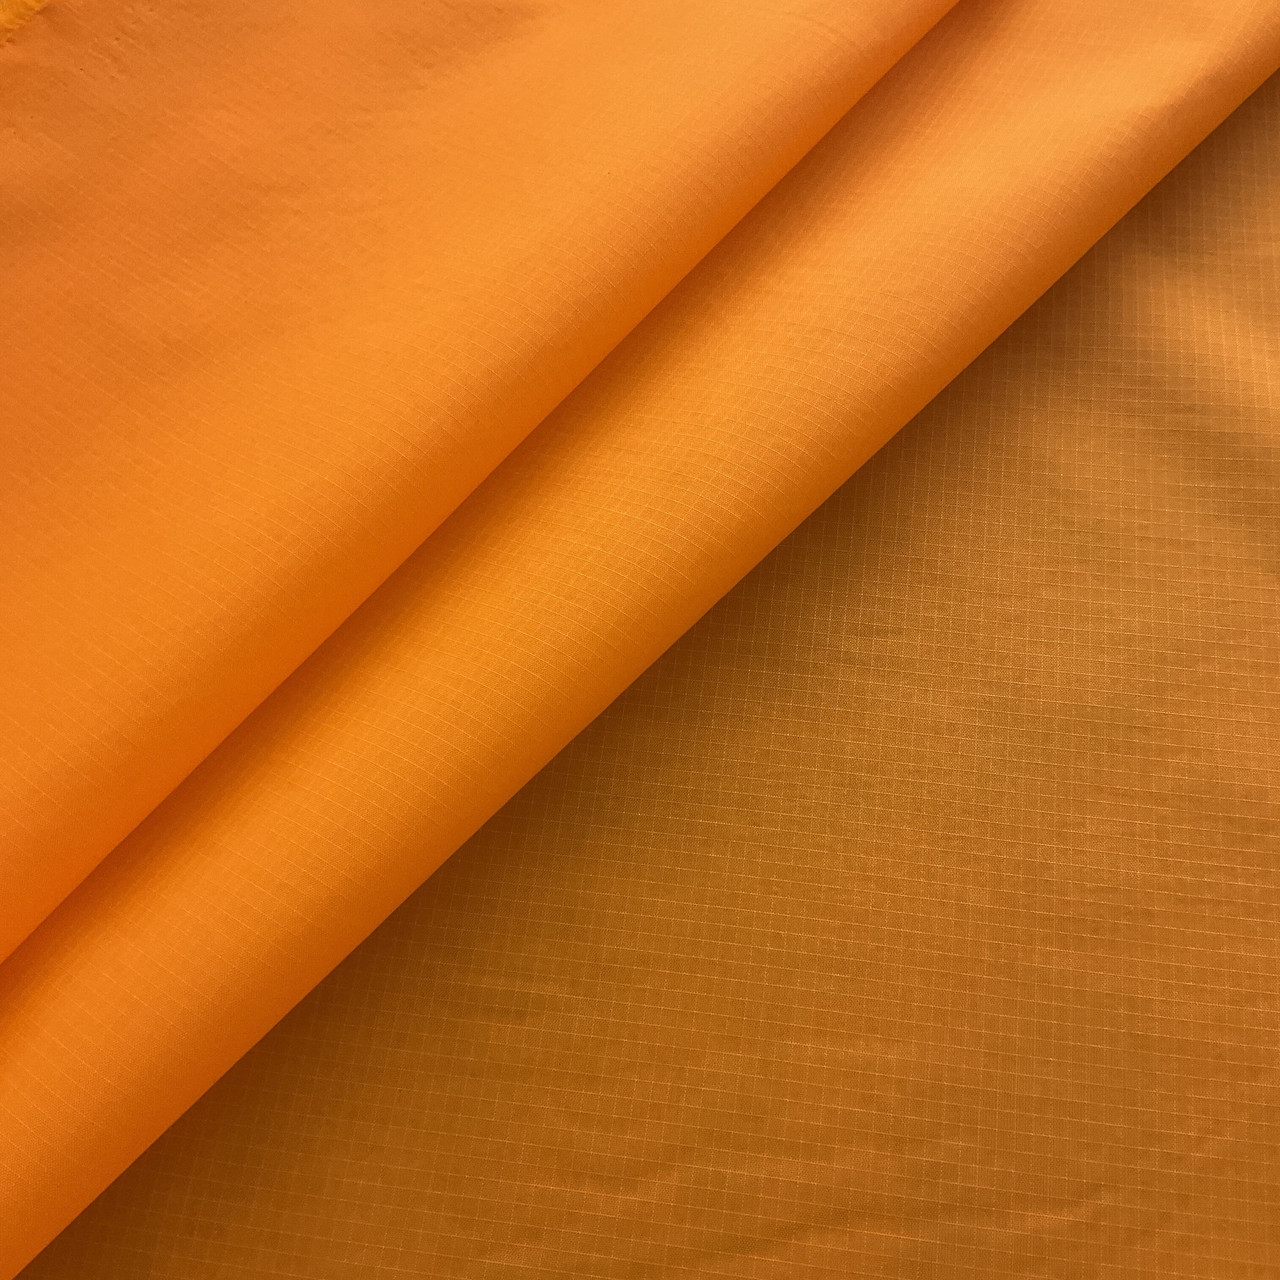 1 Yard Orange Ripstop Nylon Fabric 60 inches wide